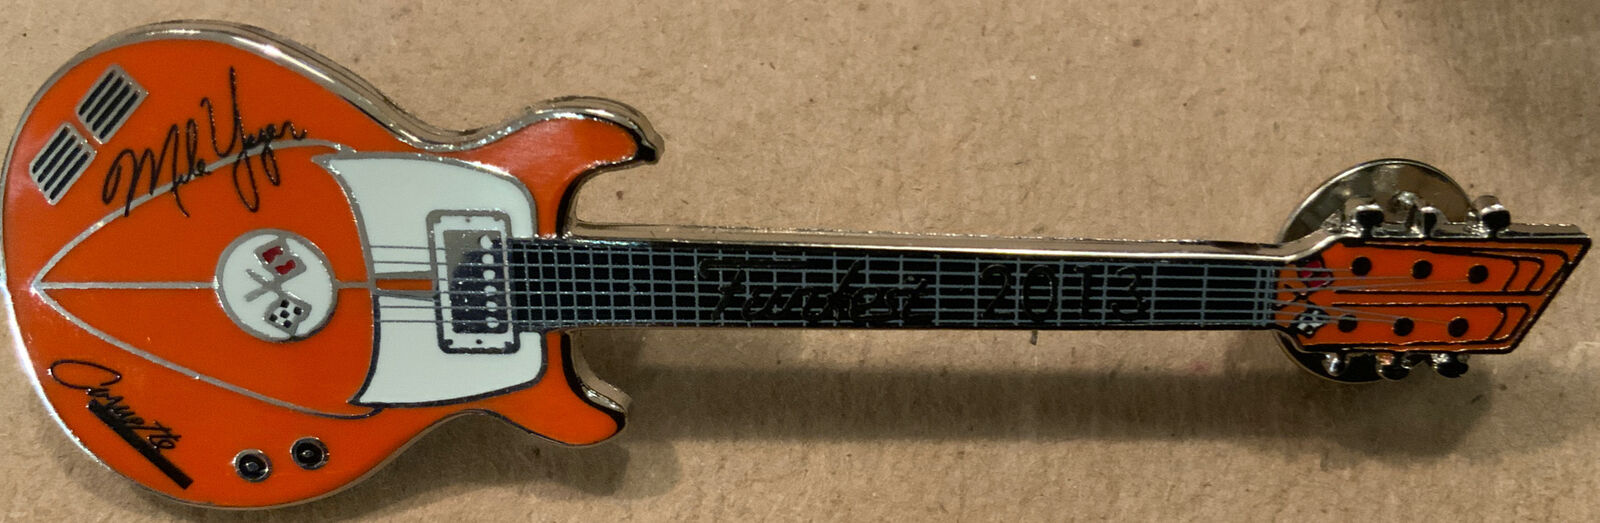 Corvette Guitar Pin 2013, Orange 3”